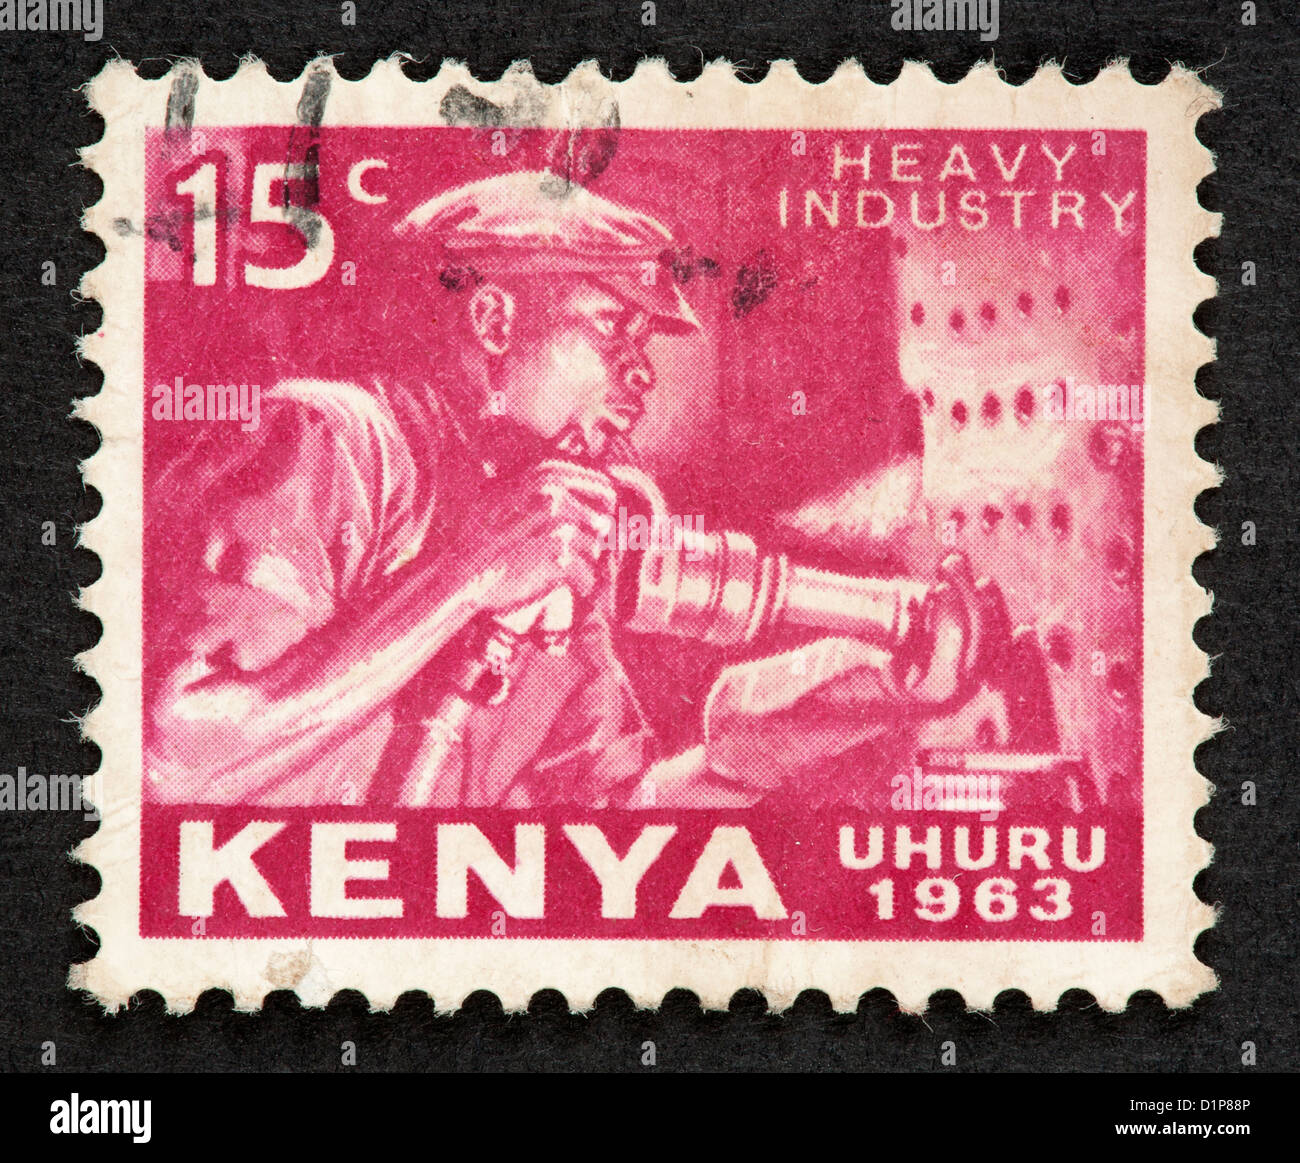 Kenya postage stamp Stock Photo